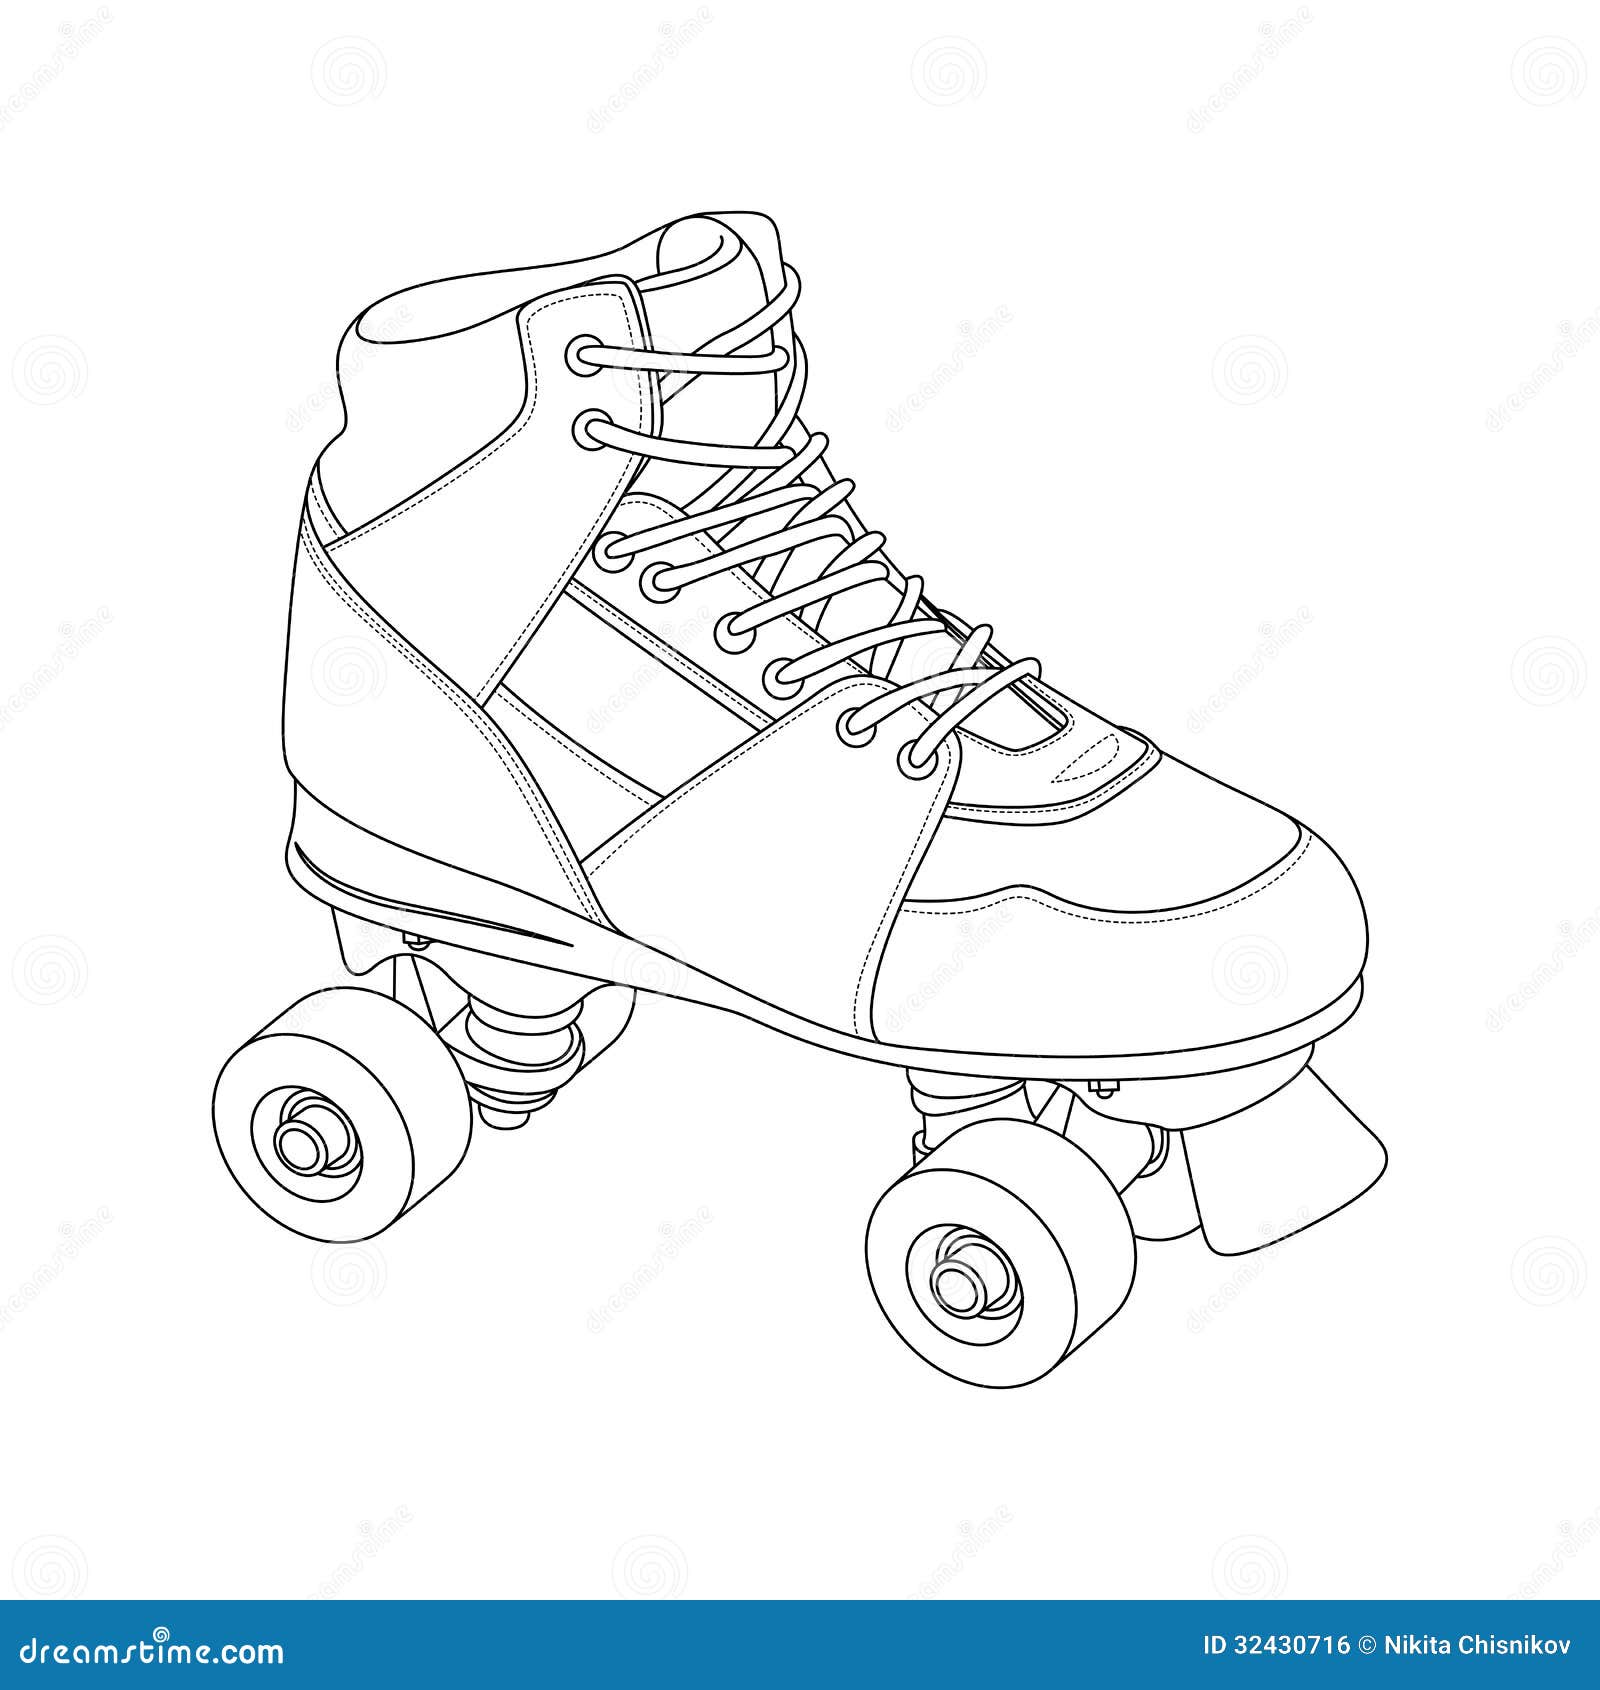 roller skate royalty free stock image  image 32430716